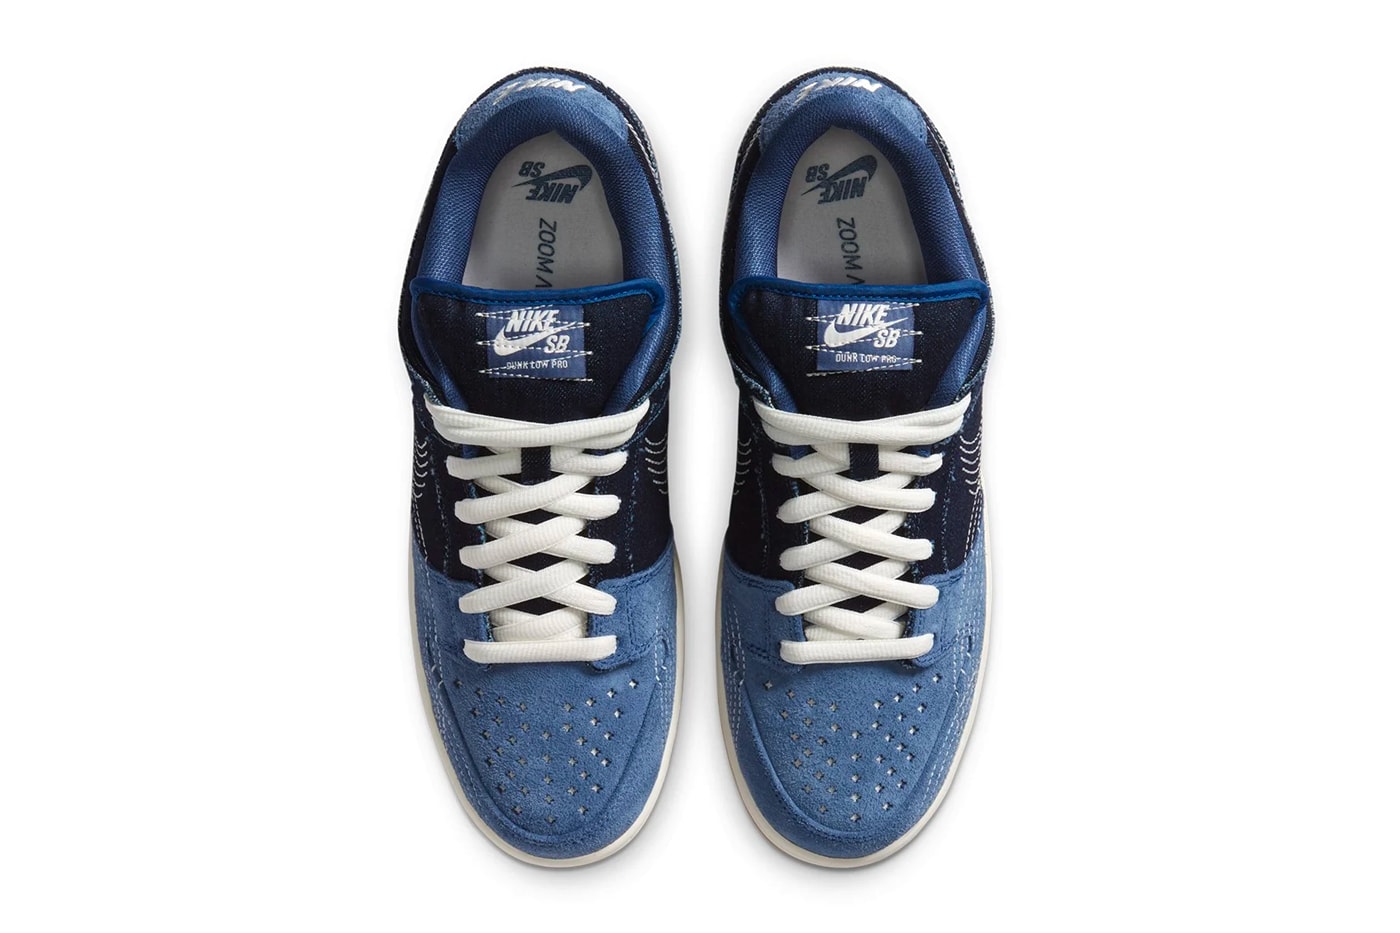 Nike SB Dunk Low Pro Prm Sashiko Full Look cv0316-40 Release Info Date Buy Price Cool Mystic Navy Gum Light Brown stitching denim blue 